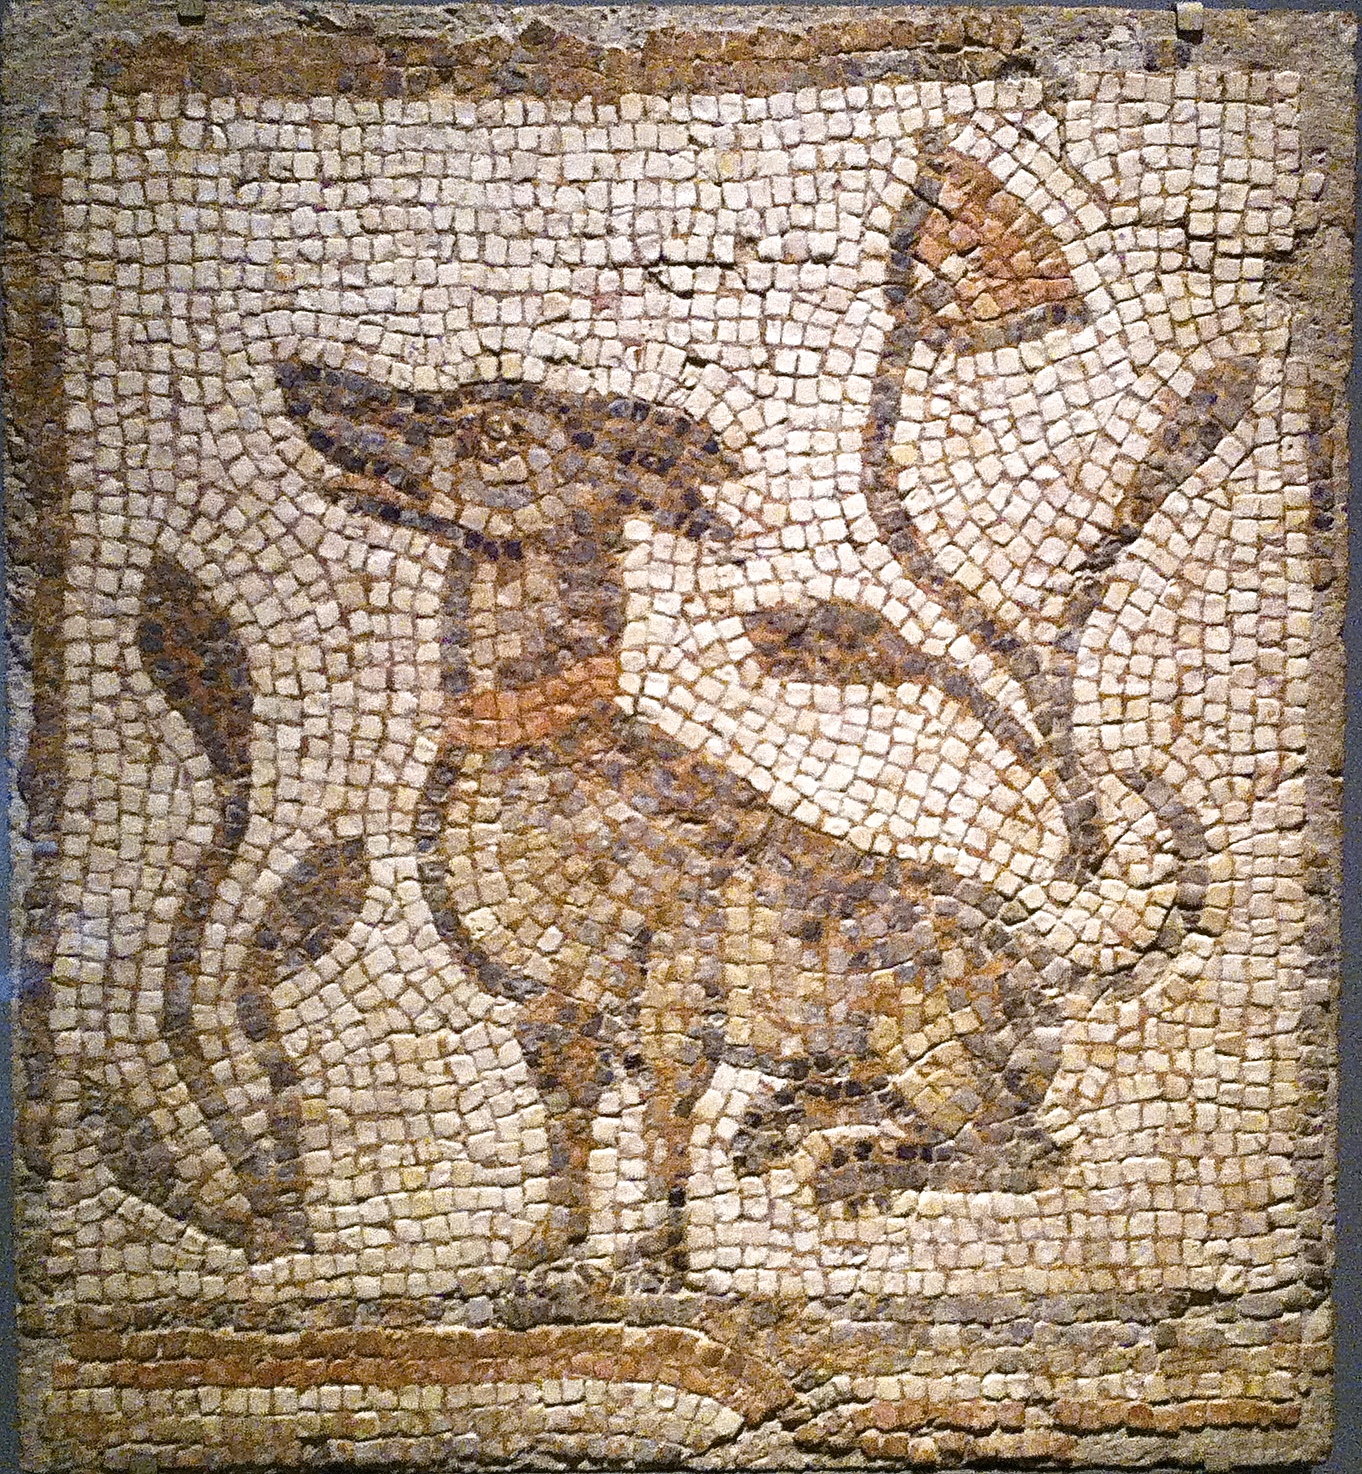 Seated dog mosaic (AIC)